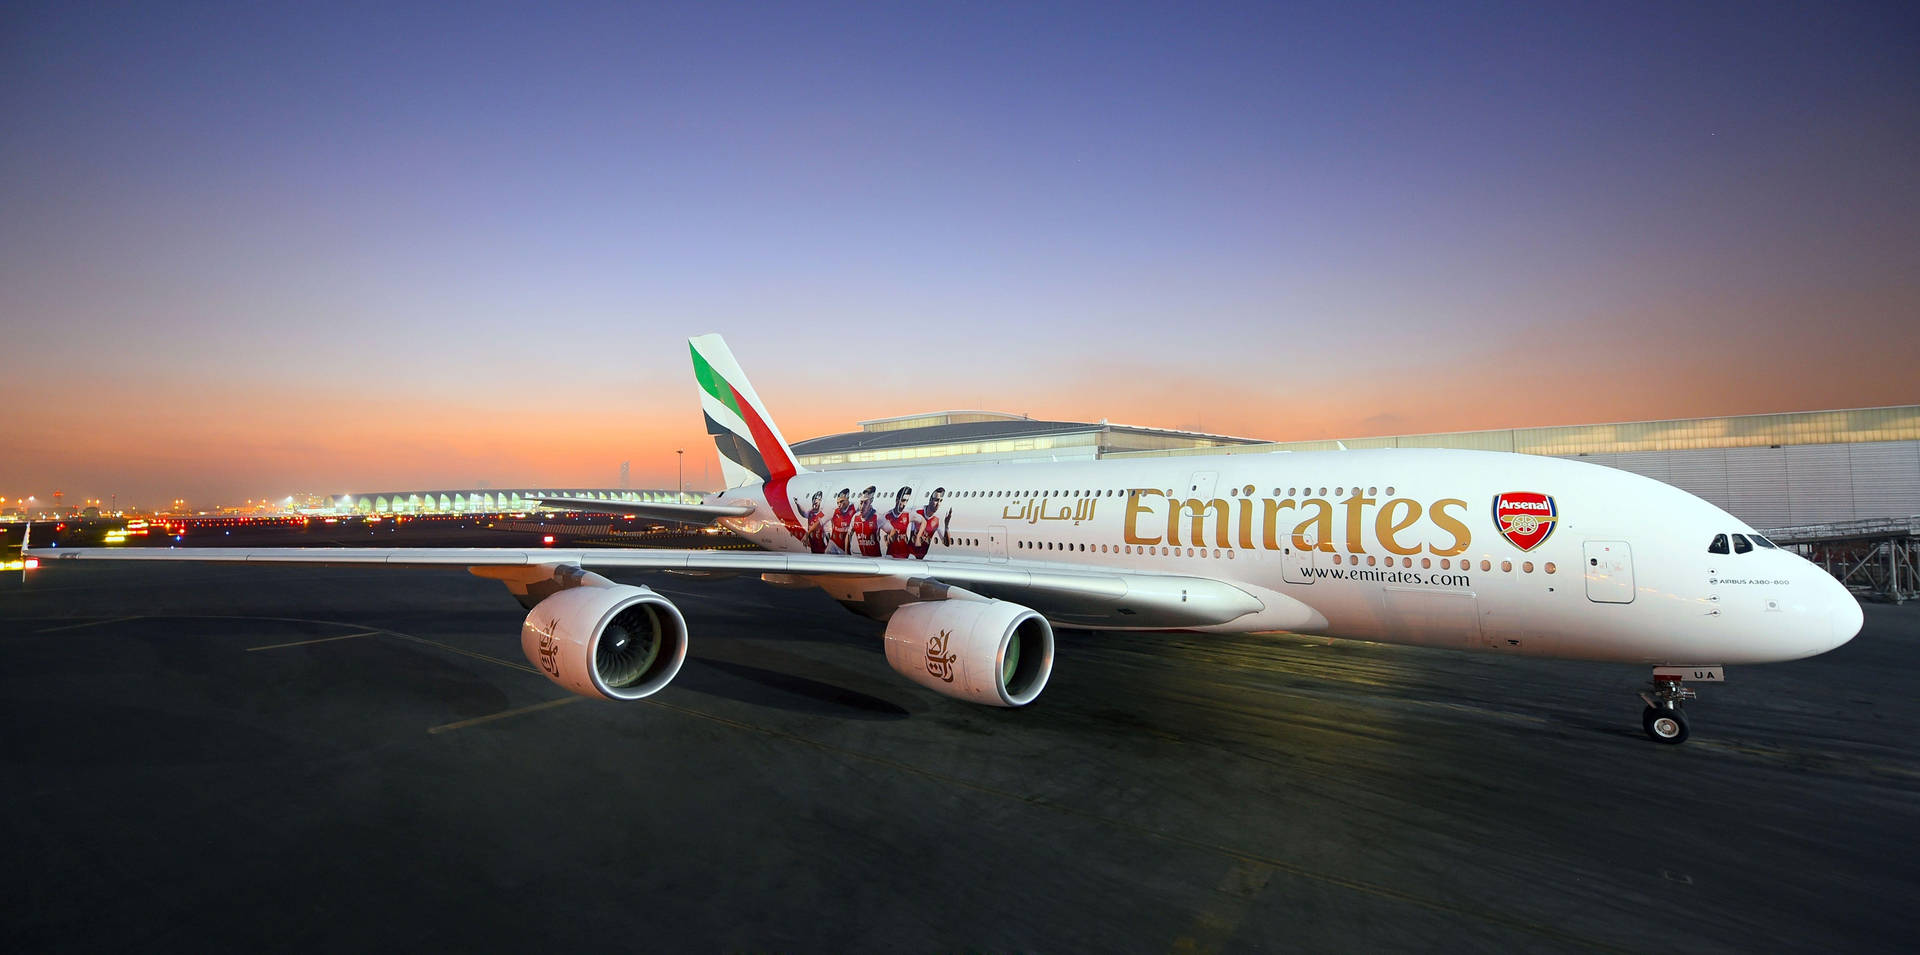 Emiratesarsenal Flugzeugmodell Wallpaper